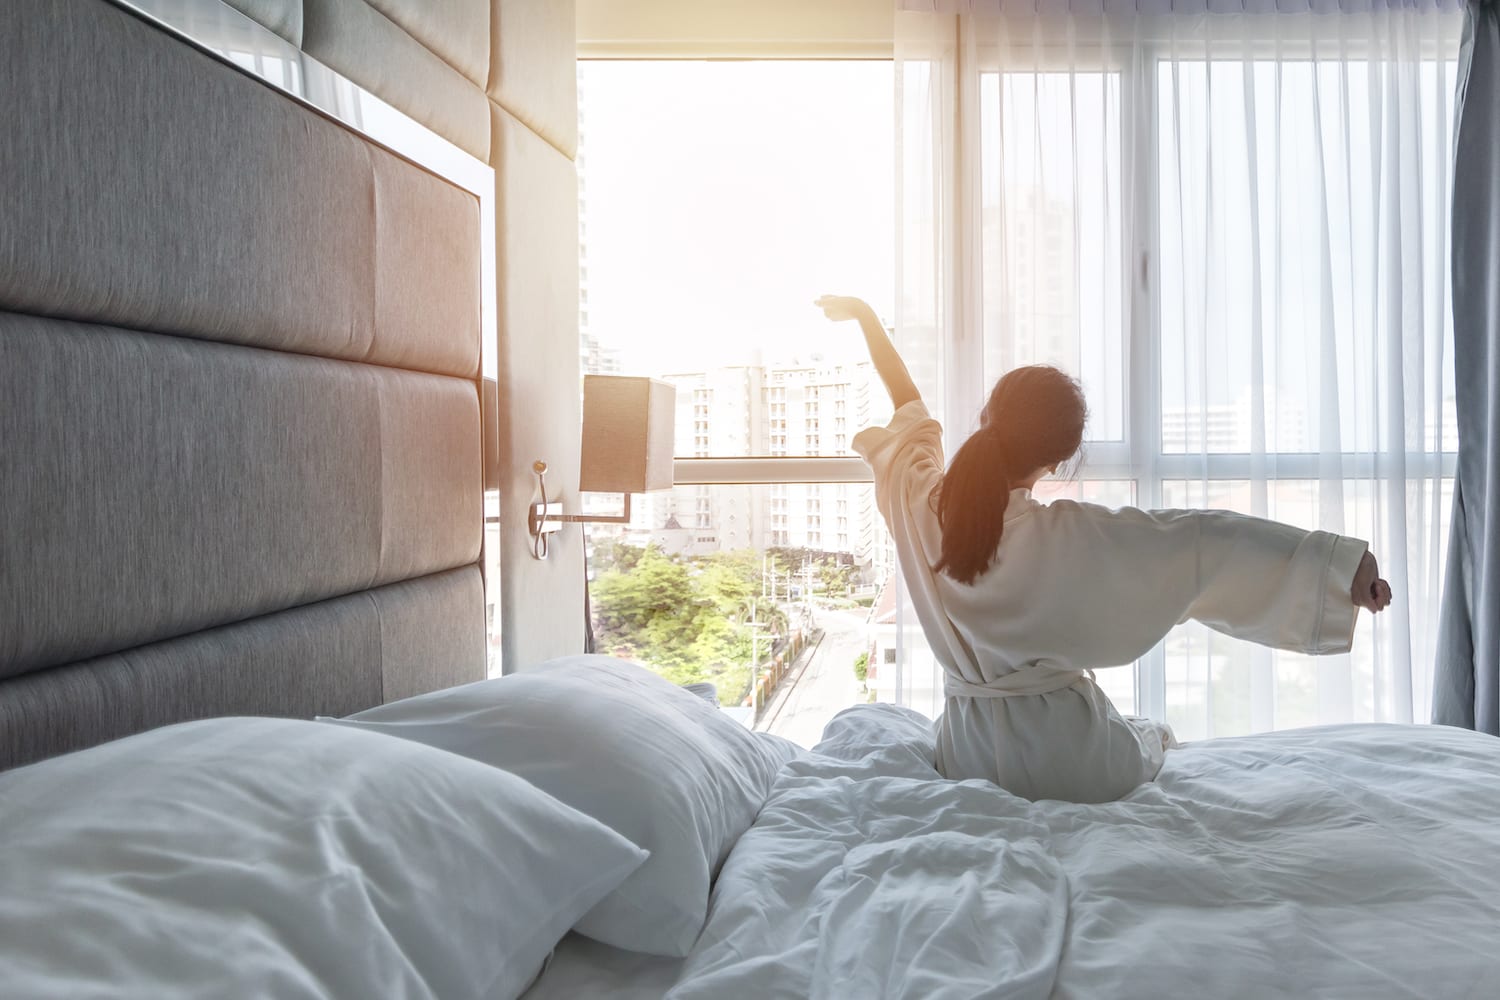 Sleepinginhotelporn - How to Get a Good Night's Sleep in a Hotel | Sleep Foundation